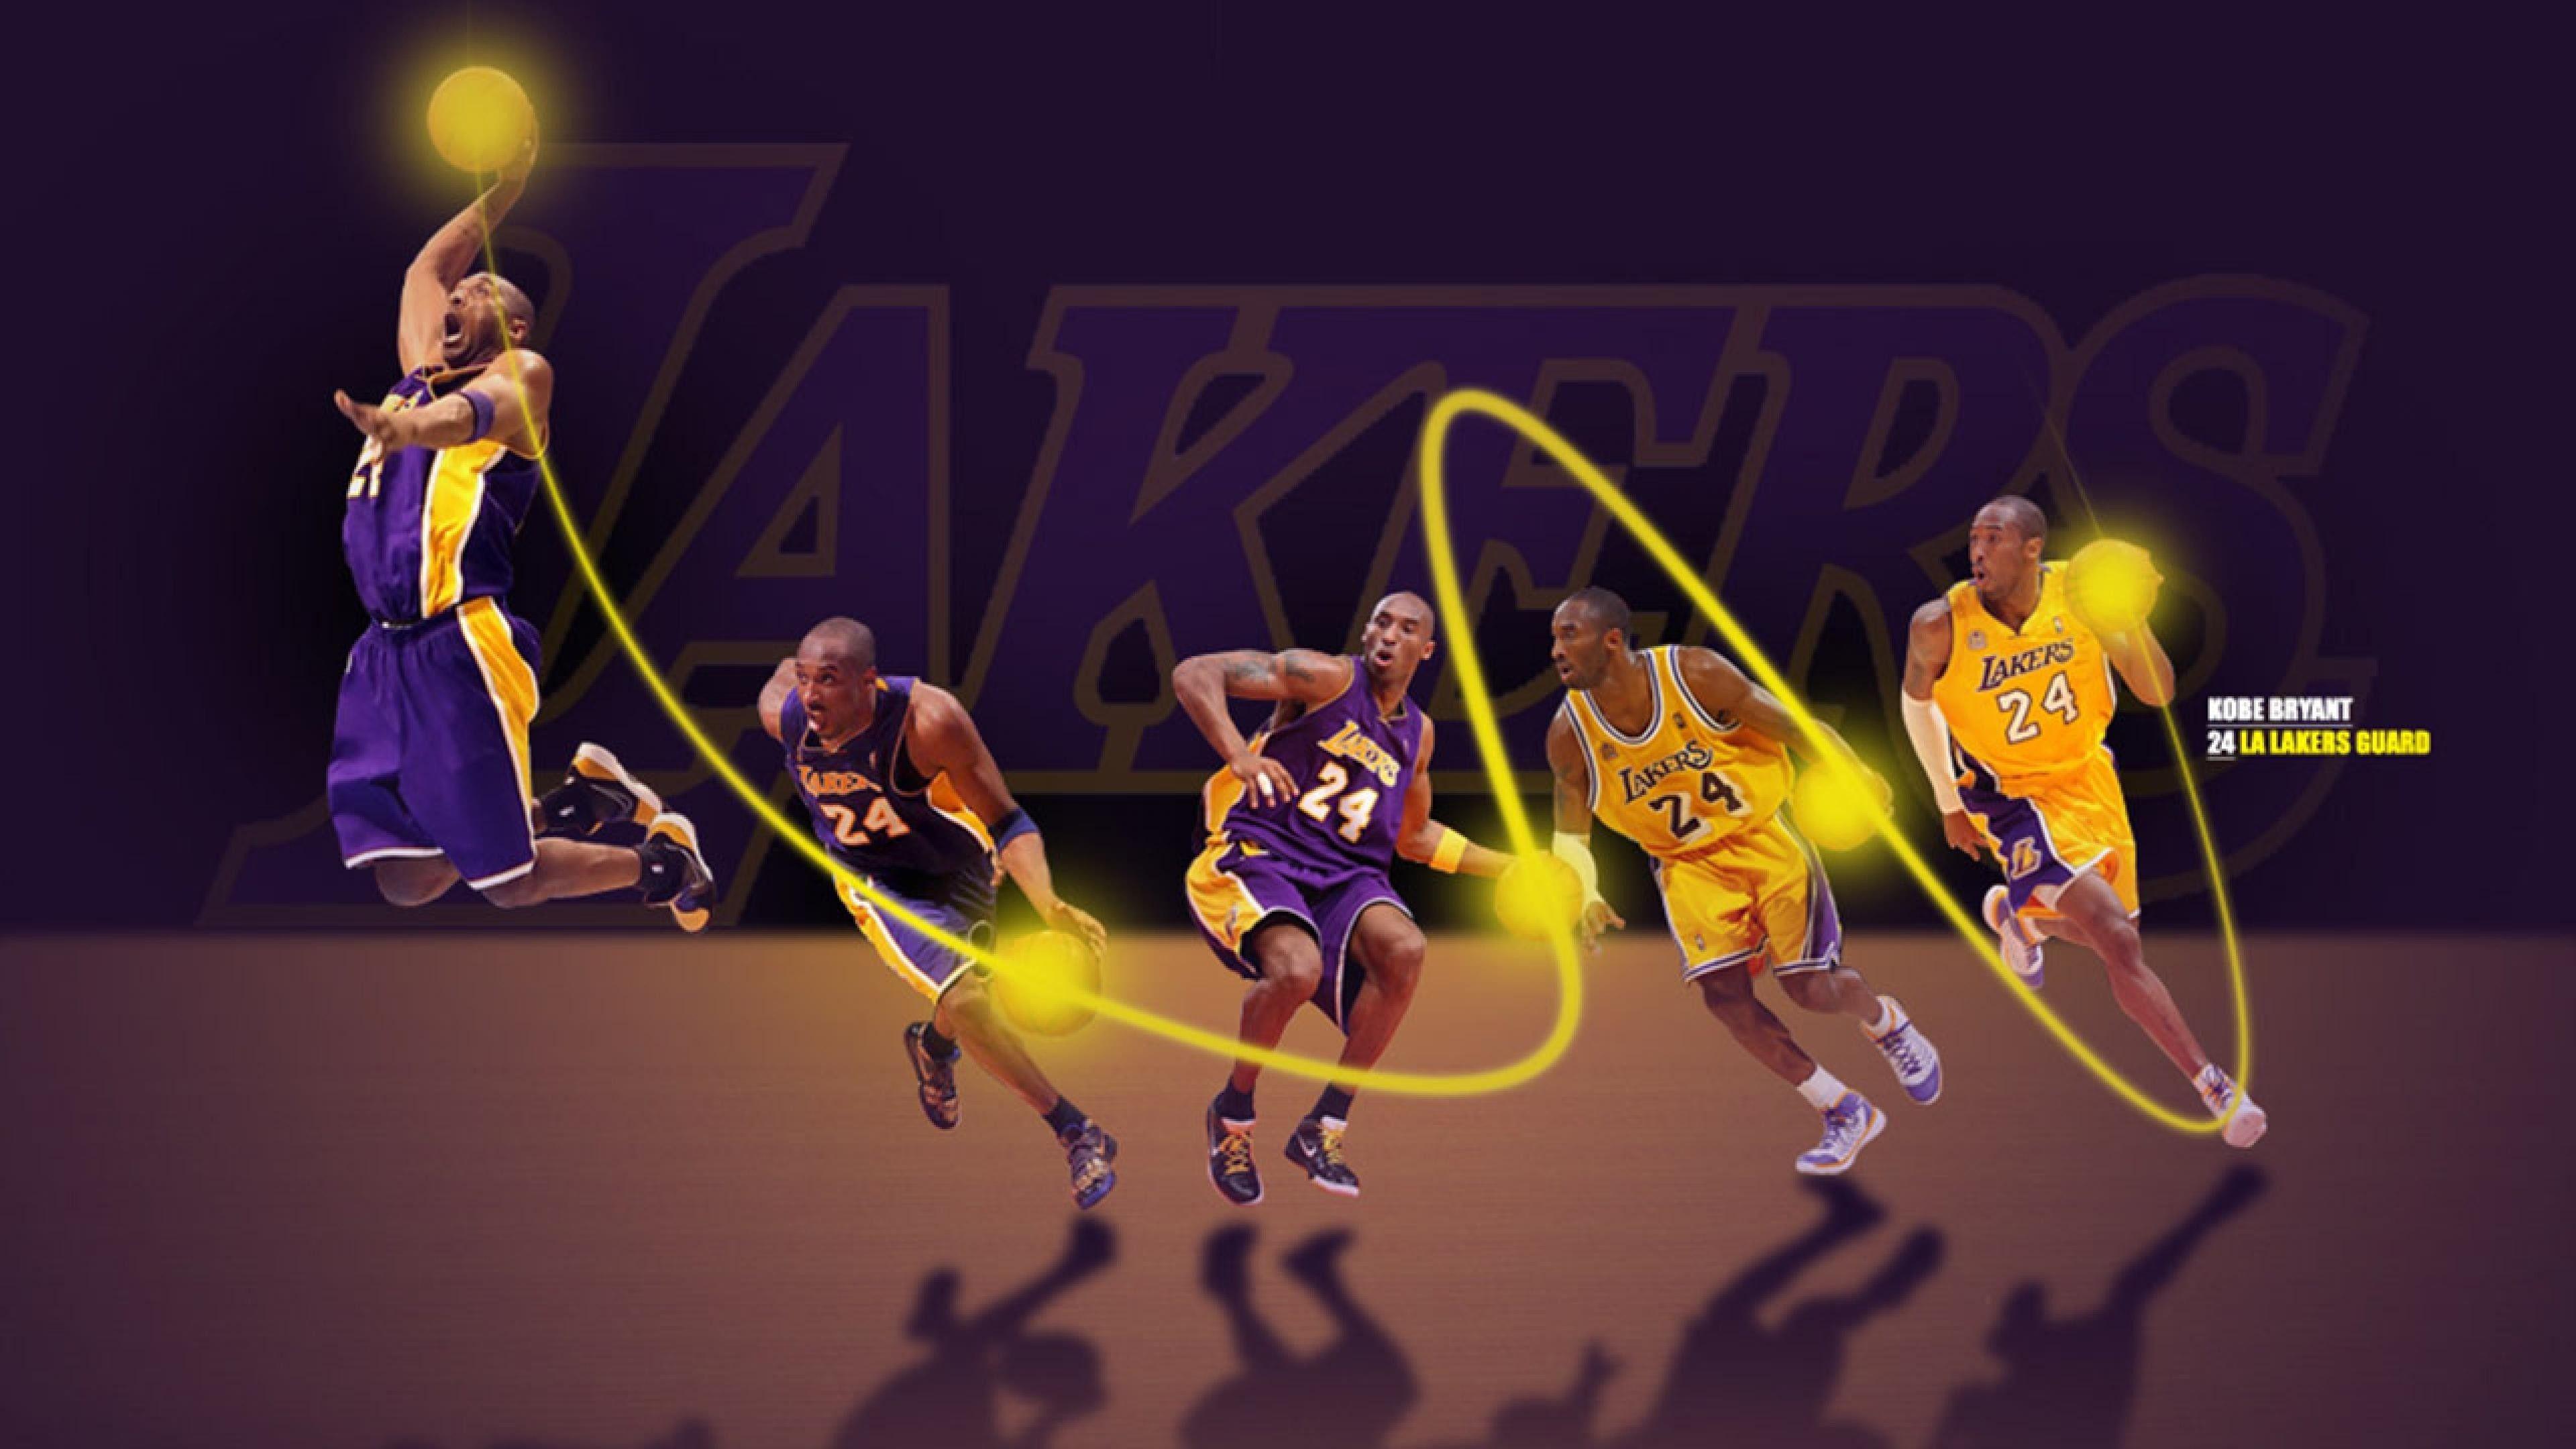 Amazing Los Angeles Lakers Background Image. Beautiful image HD